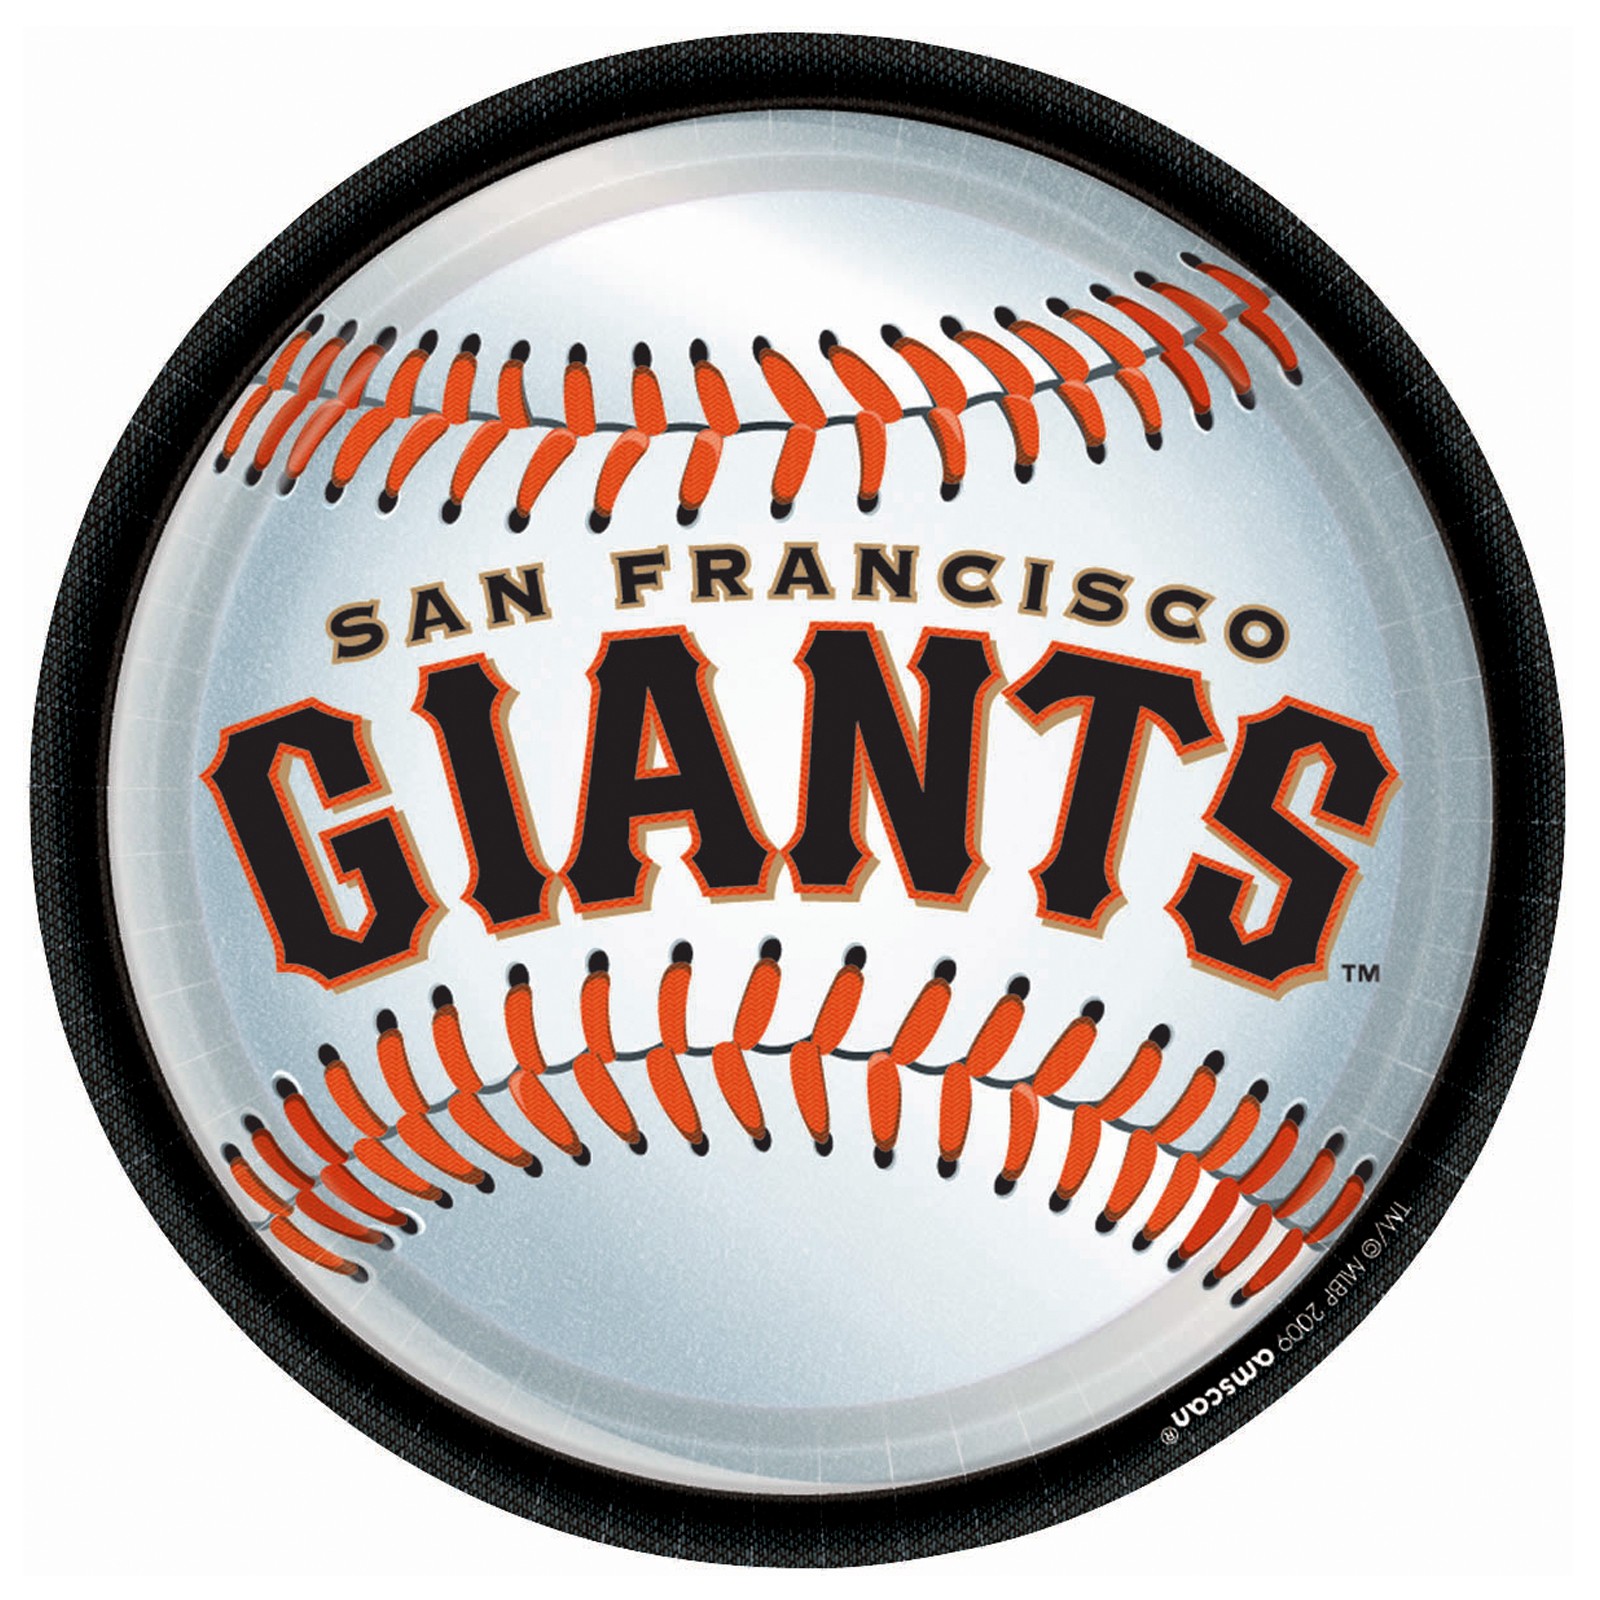 Look San Francisco Giants Baseball